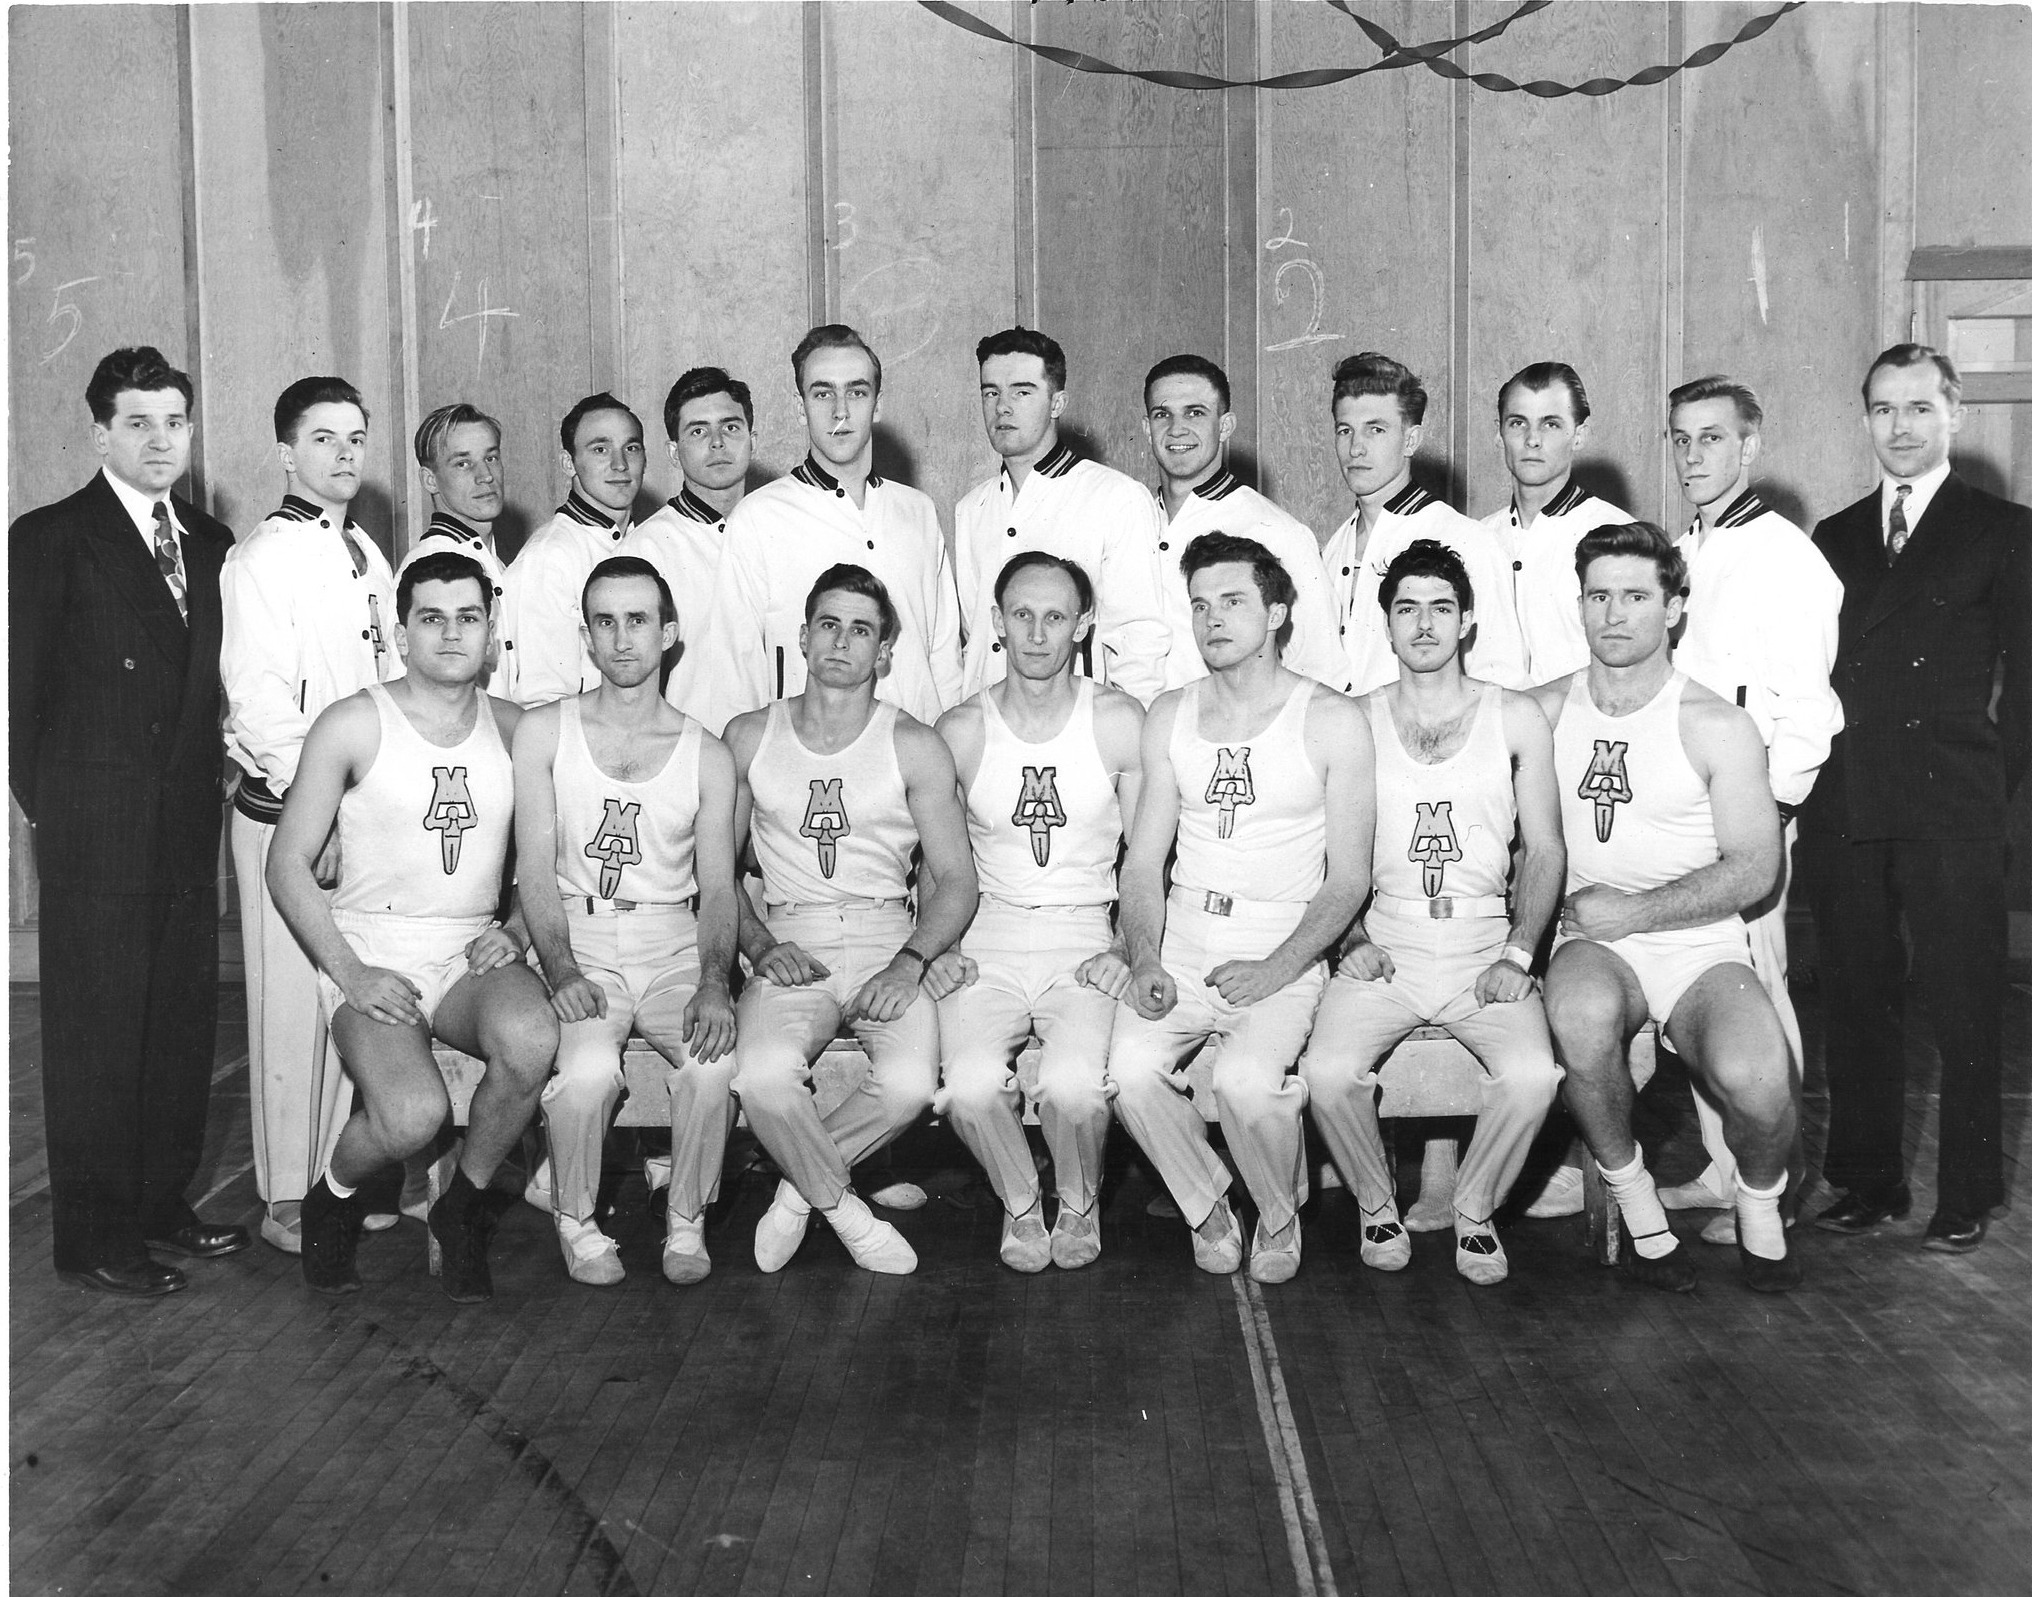 1951 Maryland Men's Gymnastics Team